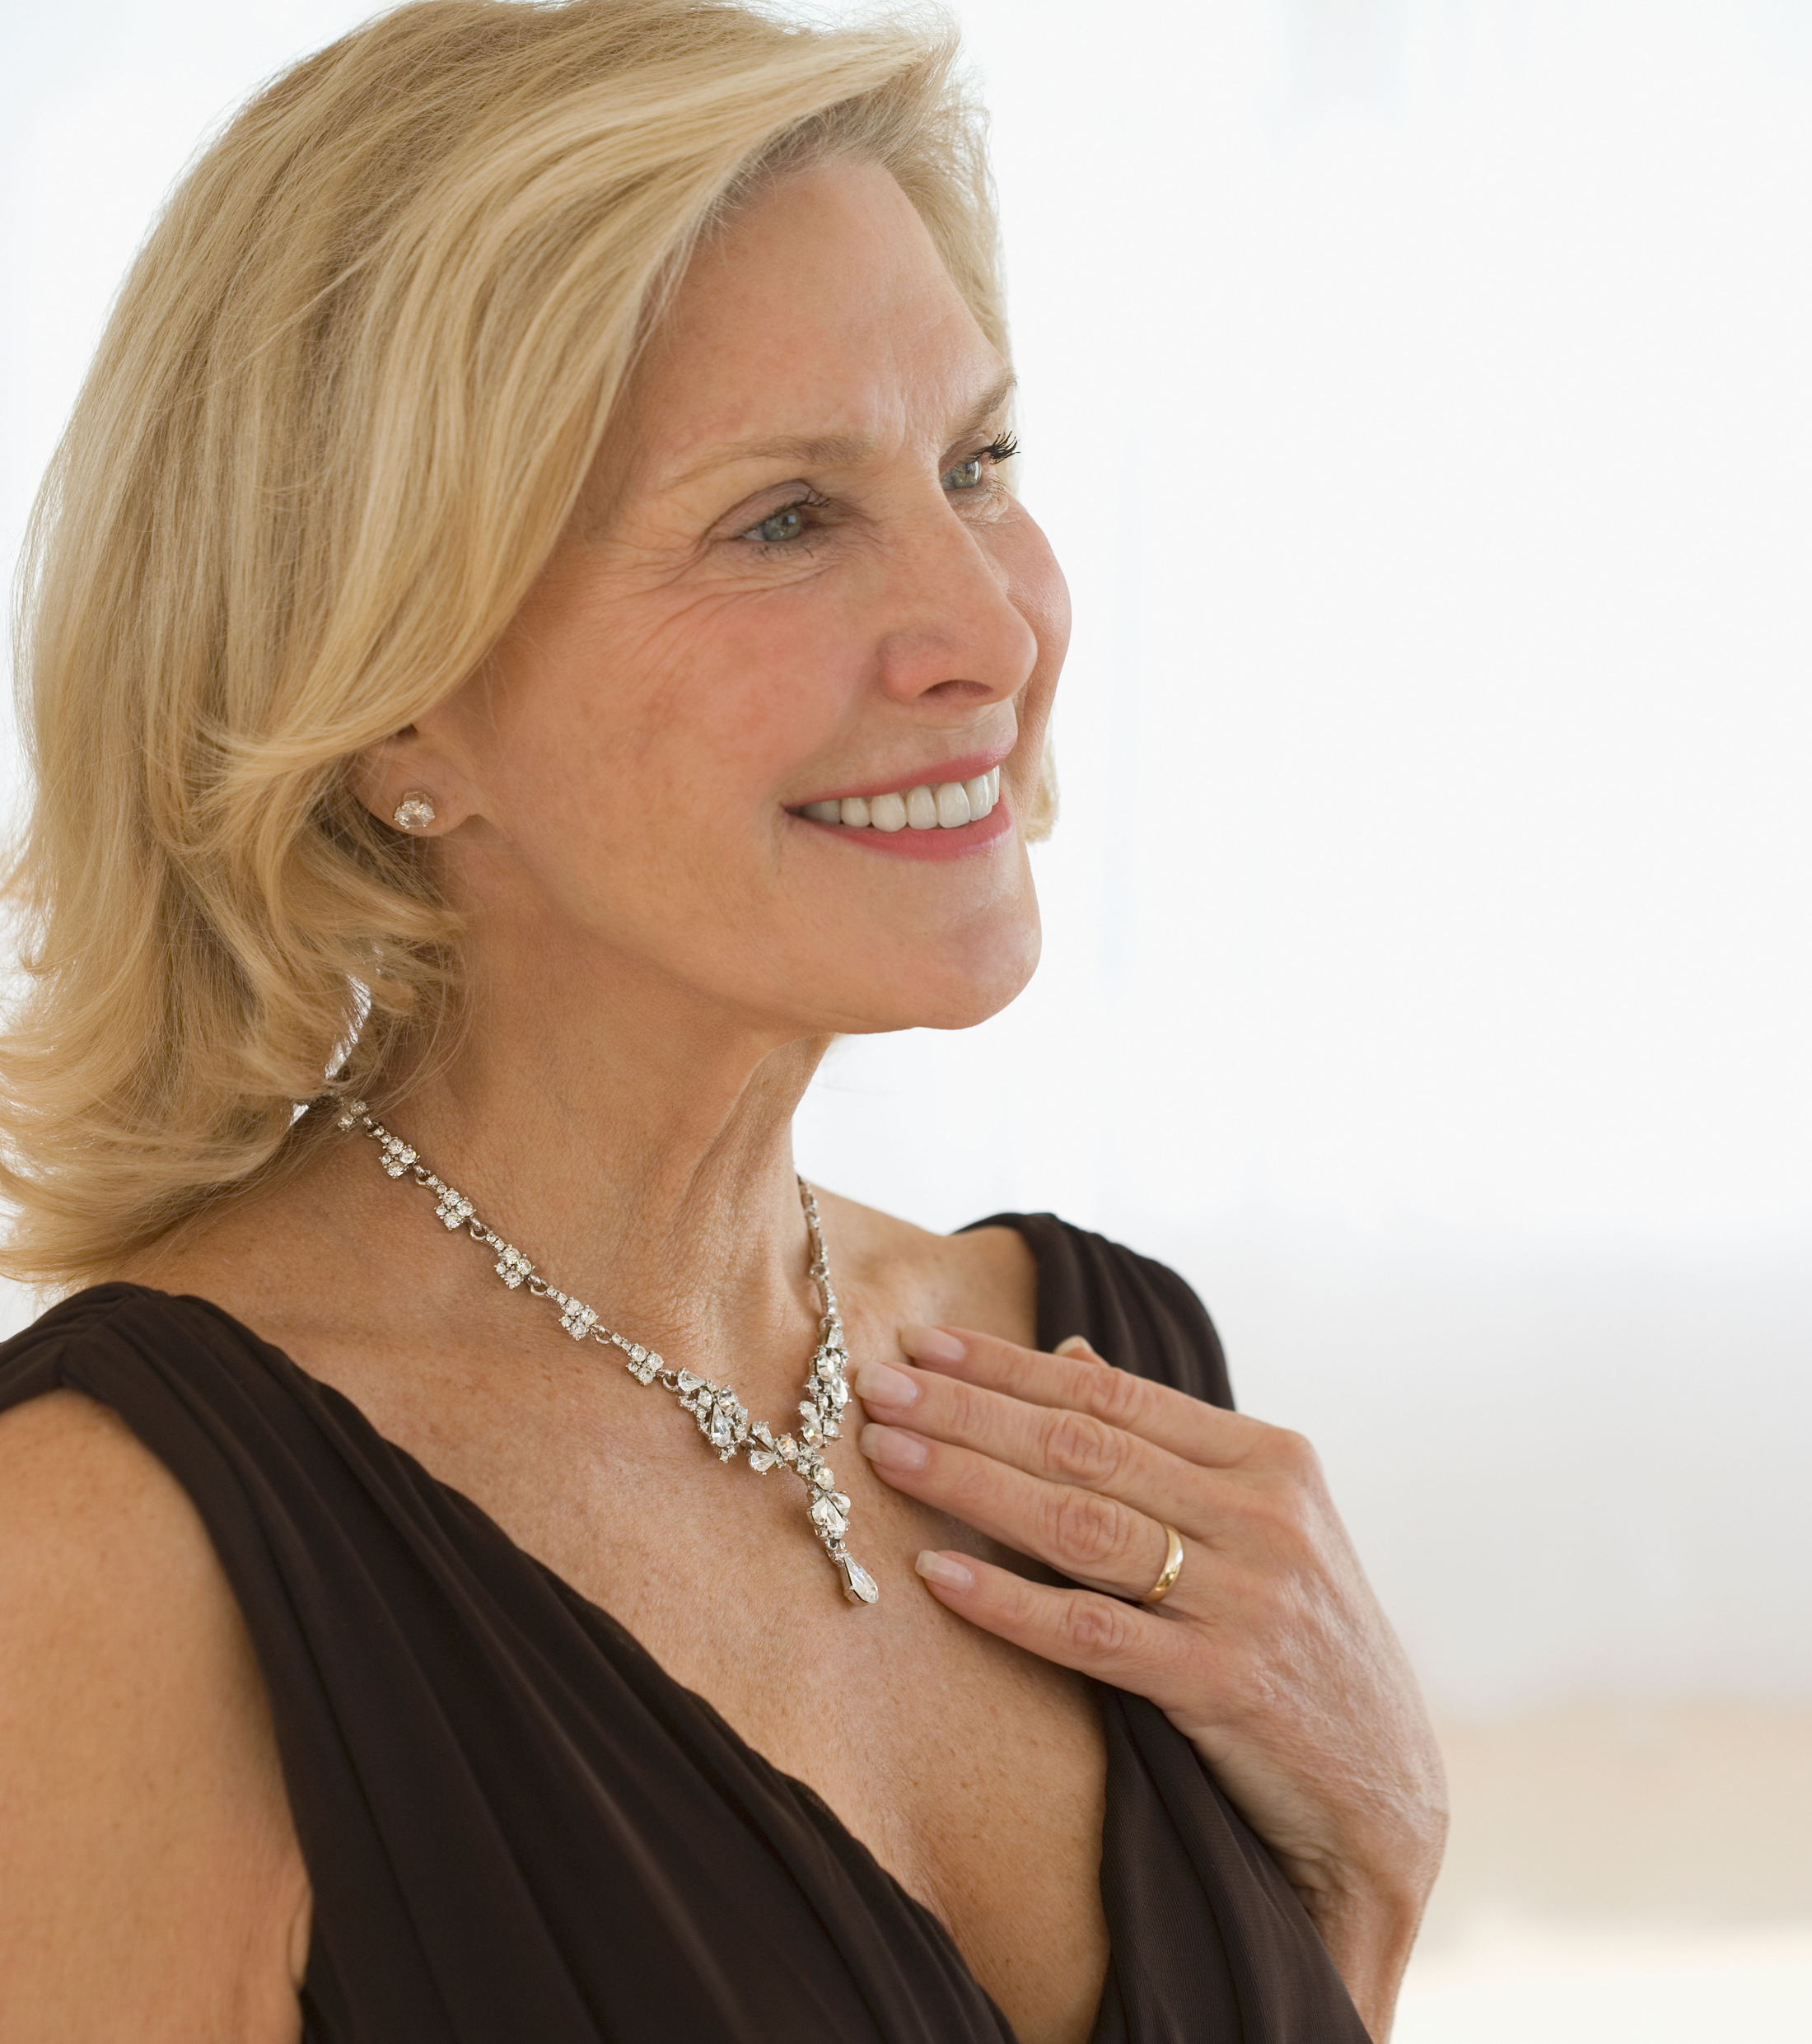  woman wearing diamond necklace